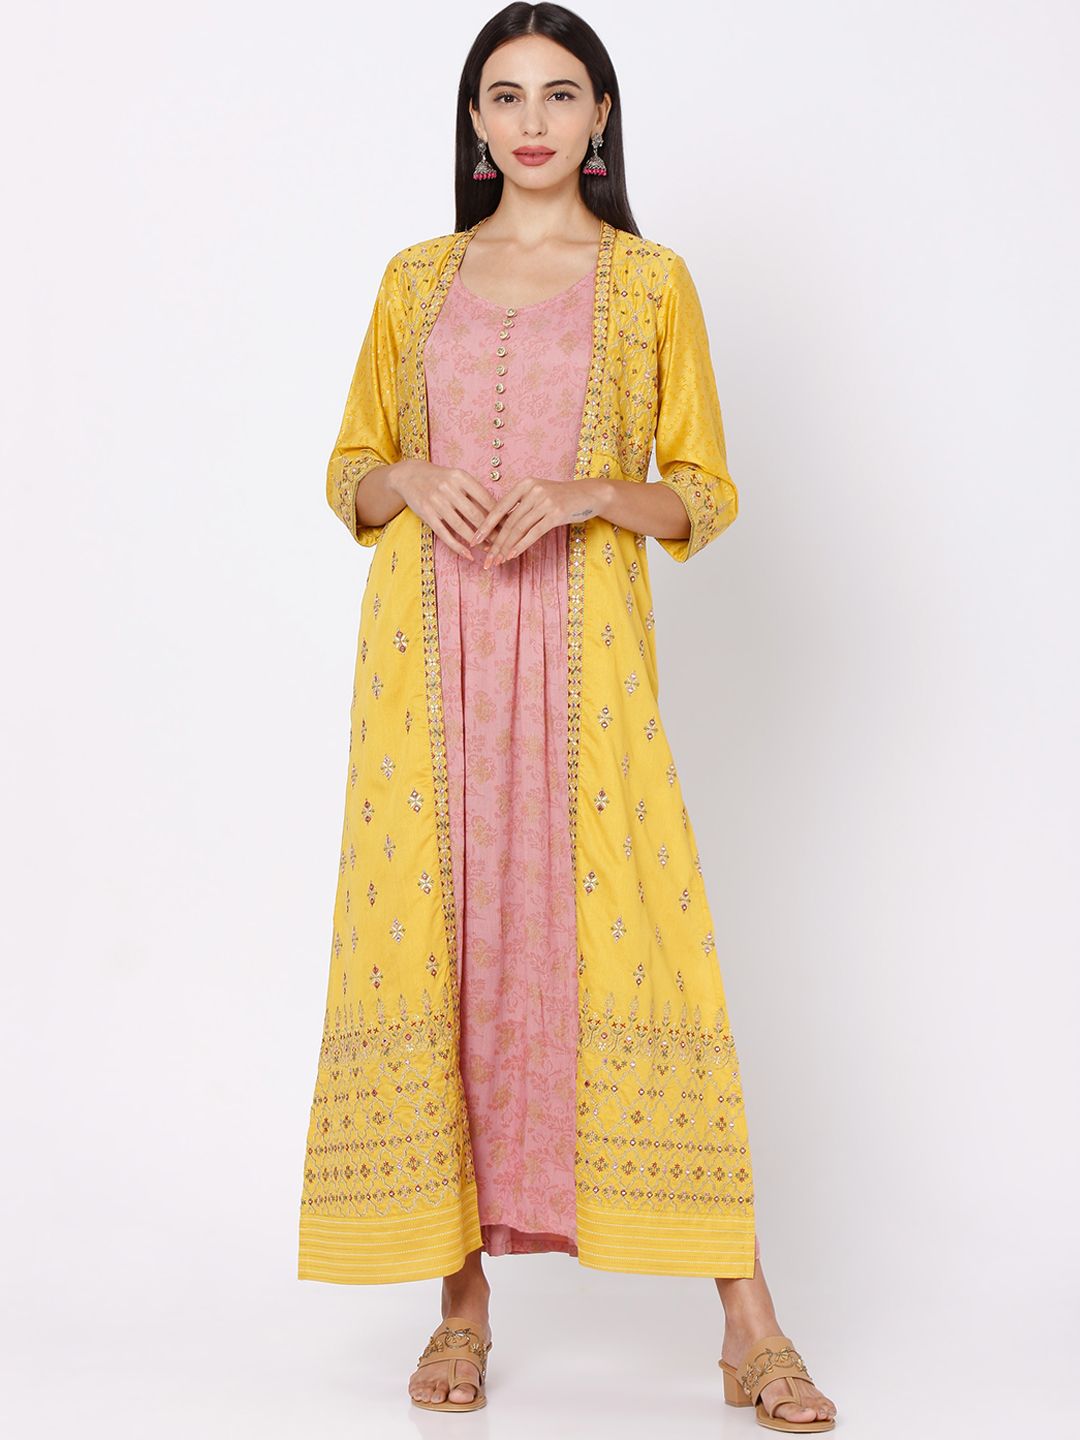 Ojas Designs Yellow Ethnic Motifs Maxi Dress Price in India